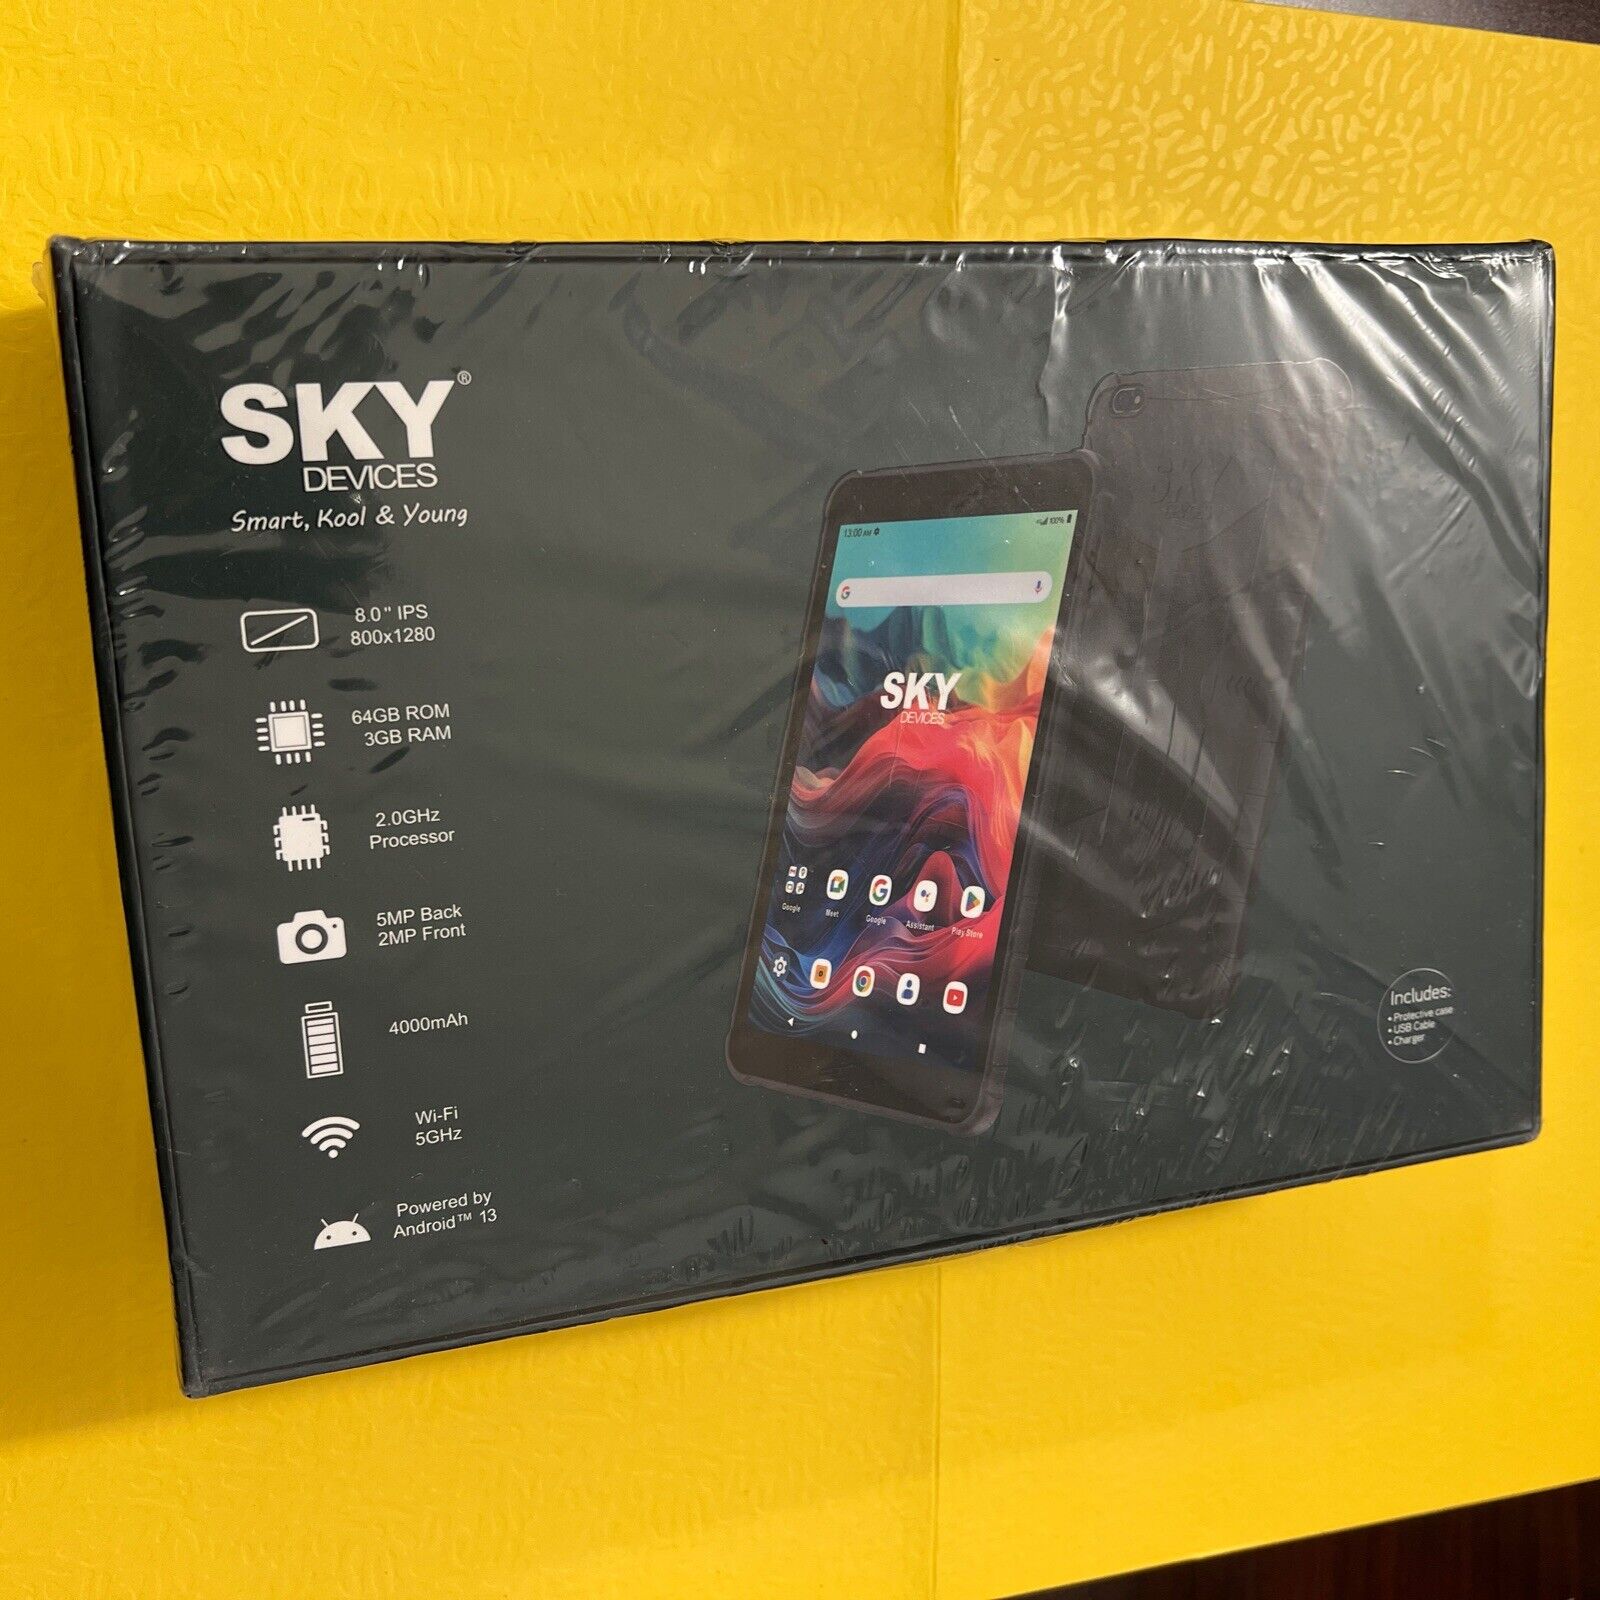 Sky Devices Skypad 8 Pro. 64GB ROM 3GB RAM Dark Grey Tablet Sealed